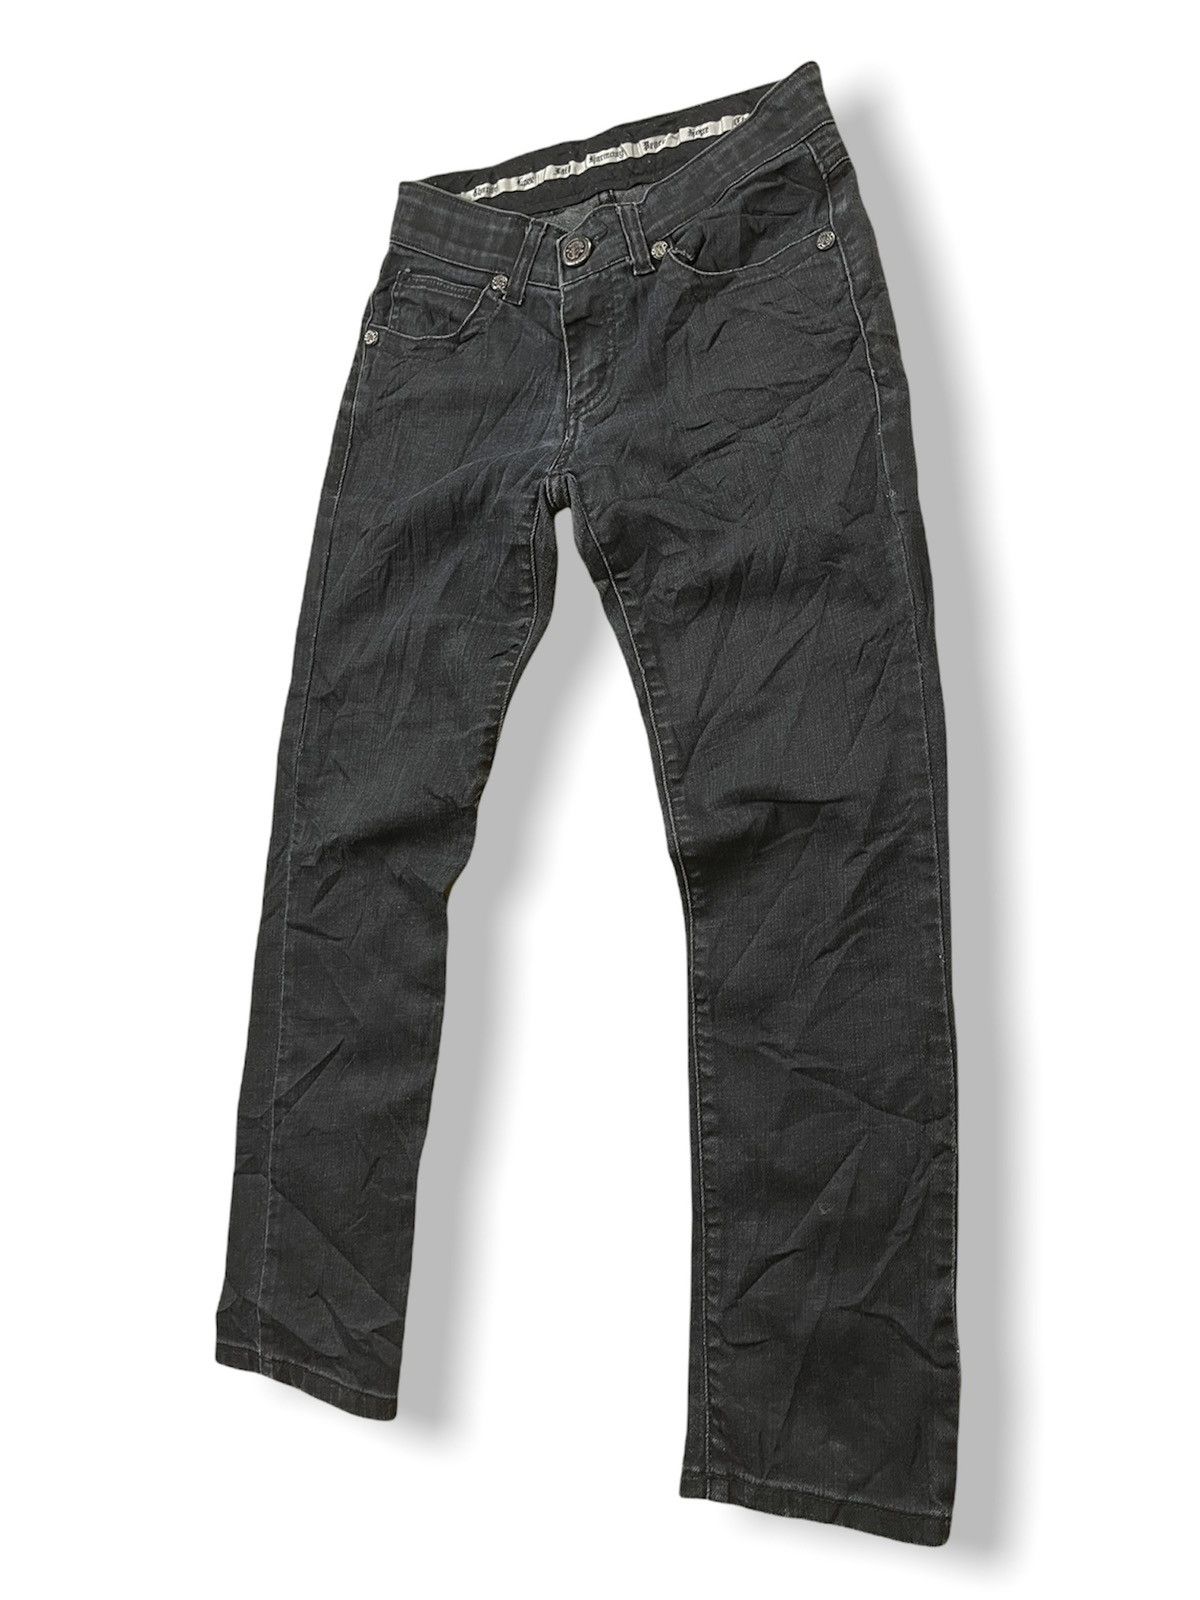 Archival Clothing - Faith Connexion Black Denim Jeans Made In Japan - 6